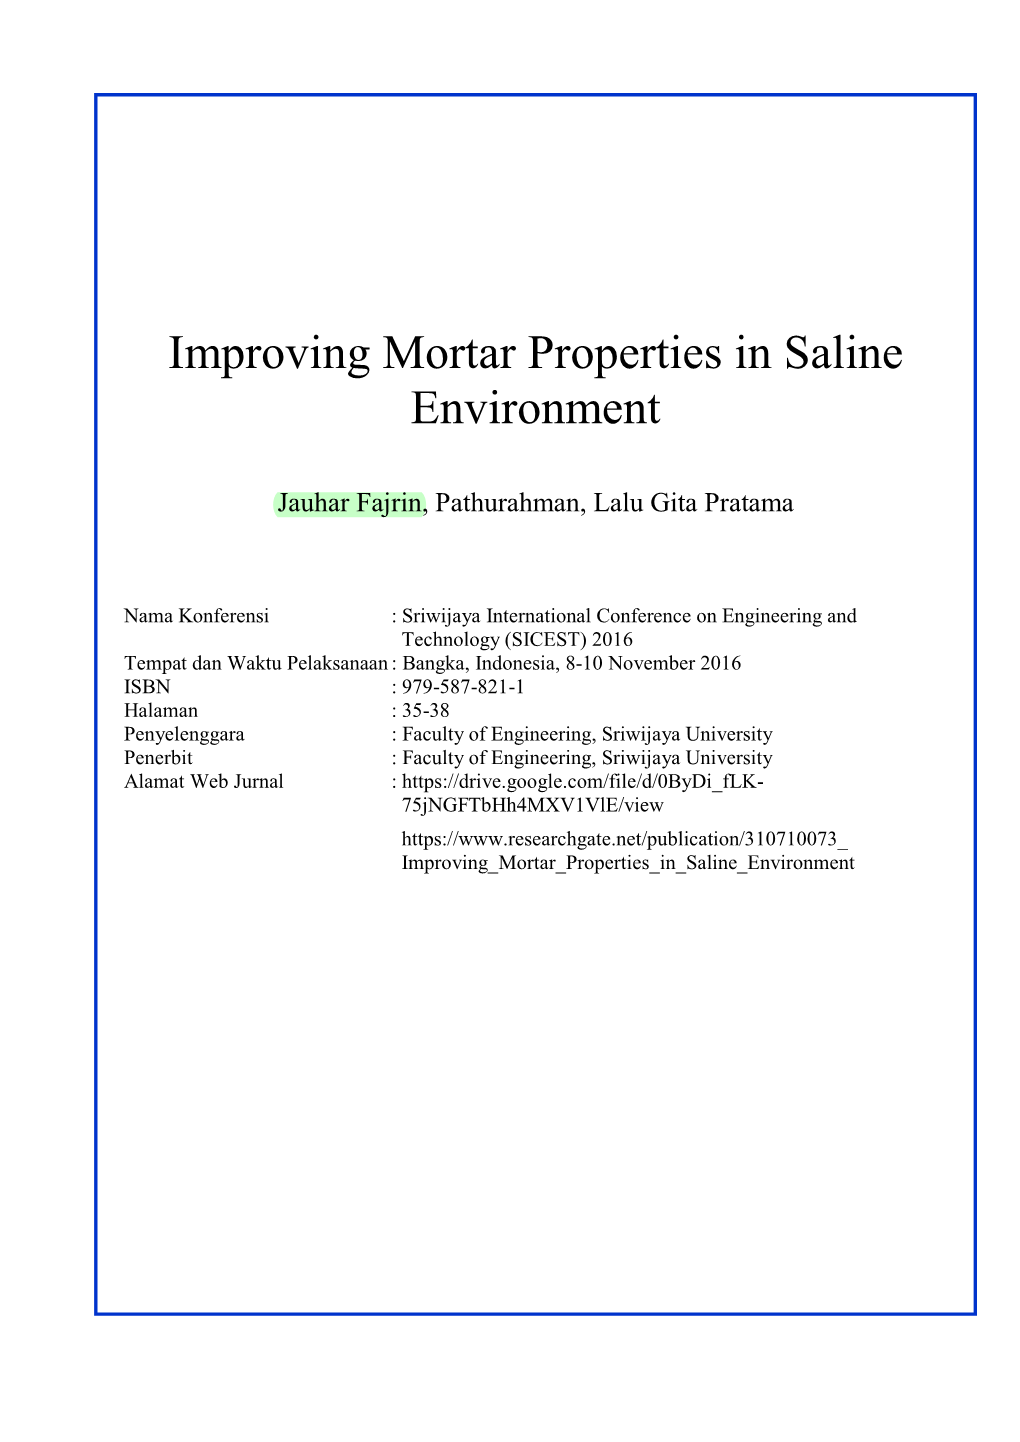 Improving Mortar Properties in Saline Environment